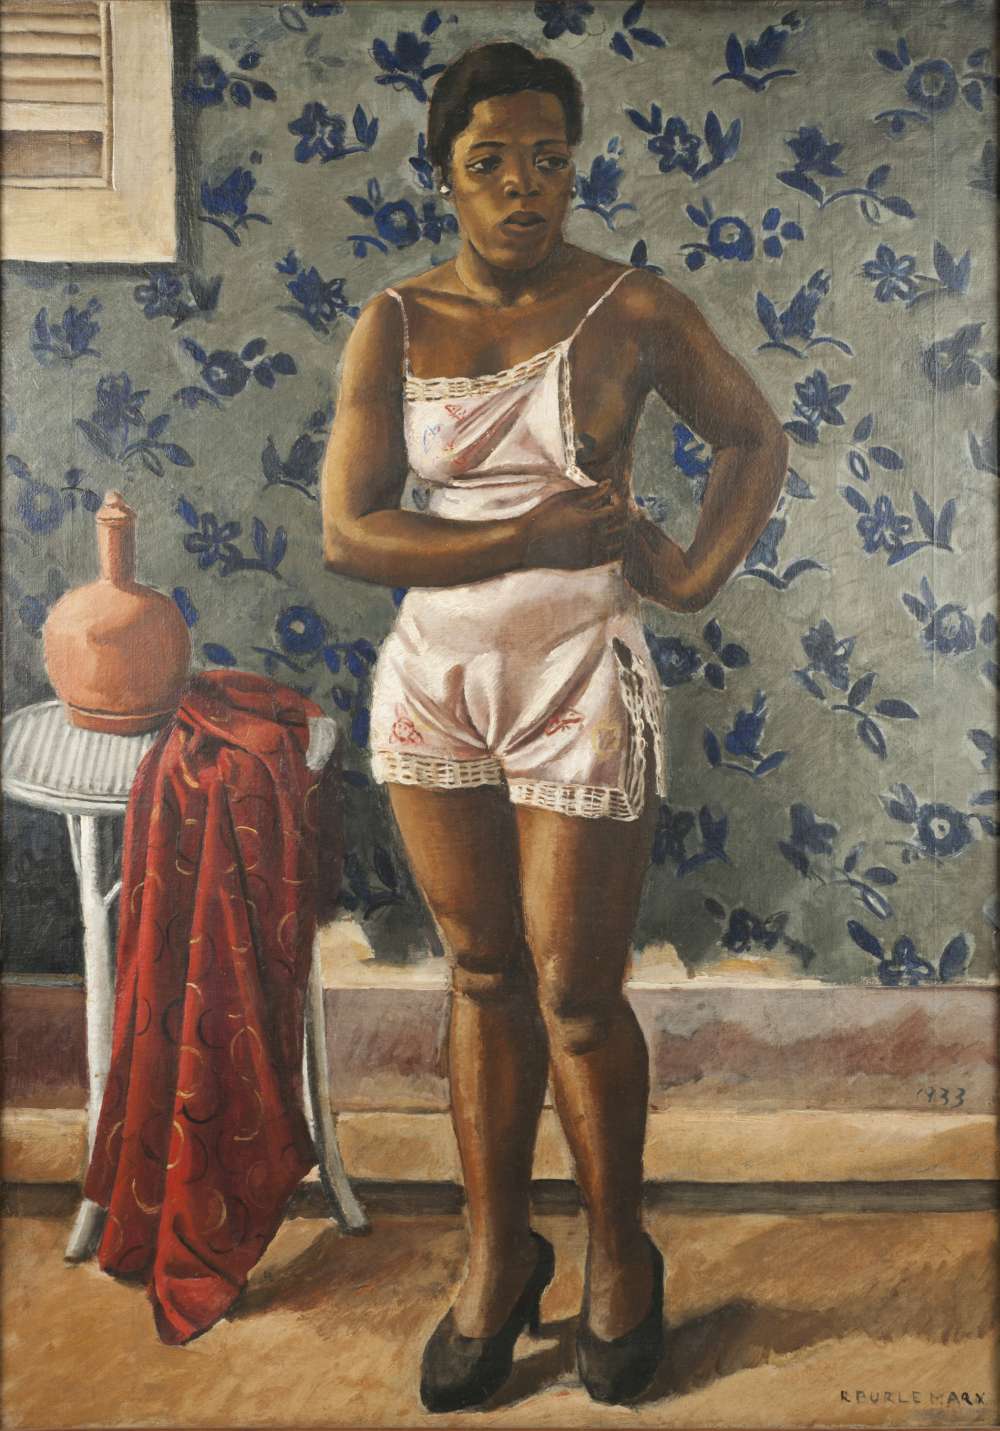 Roberto Burle Marx, Woman in a Pink Slip, 1933, oil on canvas, 39 æ x 28 in. (101 x 71.1 cm). SÌtio Roberto Burle Marx, Rio de Janeiro.